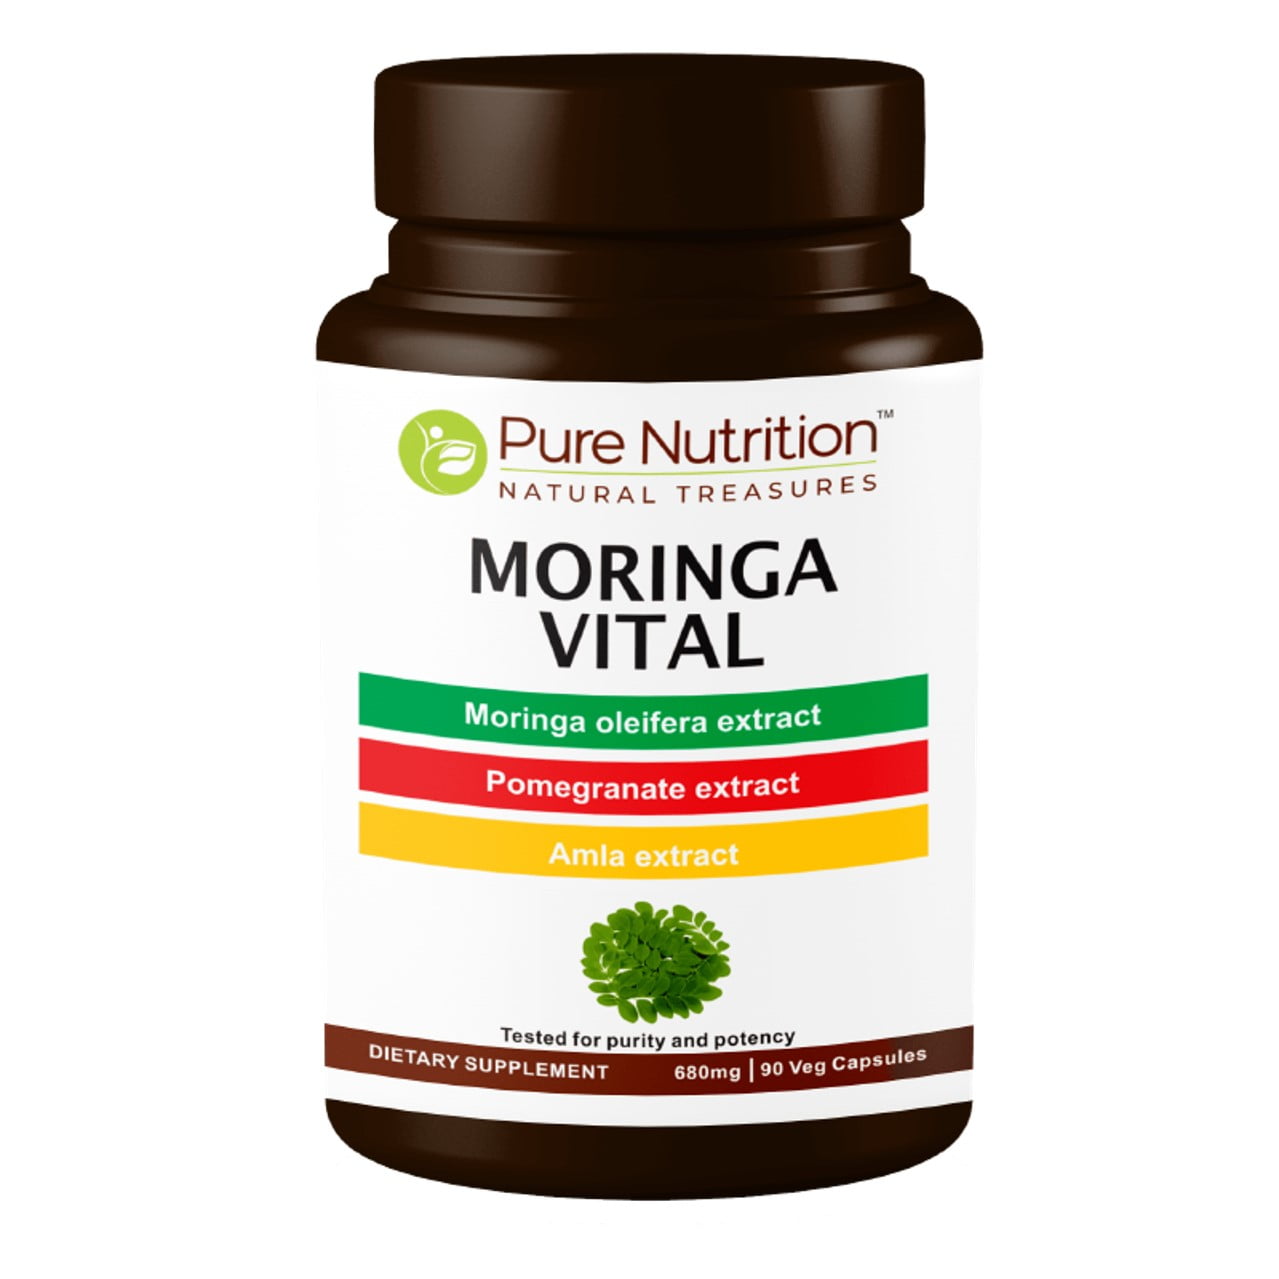 Pure Nutrition Moringa Multi Vitamins & Trace Minerals with Vital Nutrients - 90 Veg Capsules -